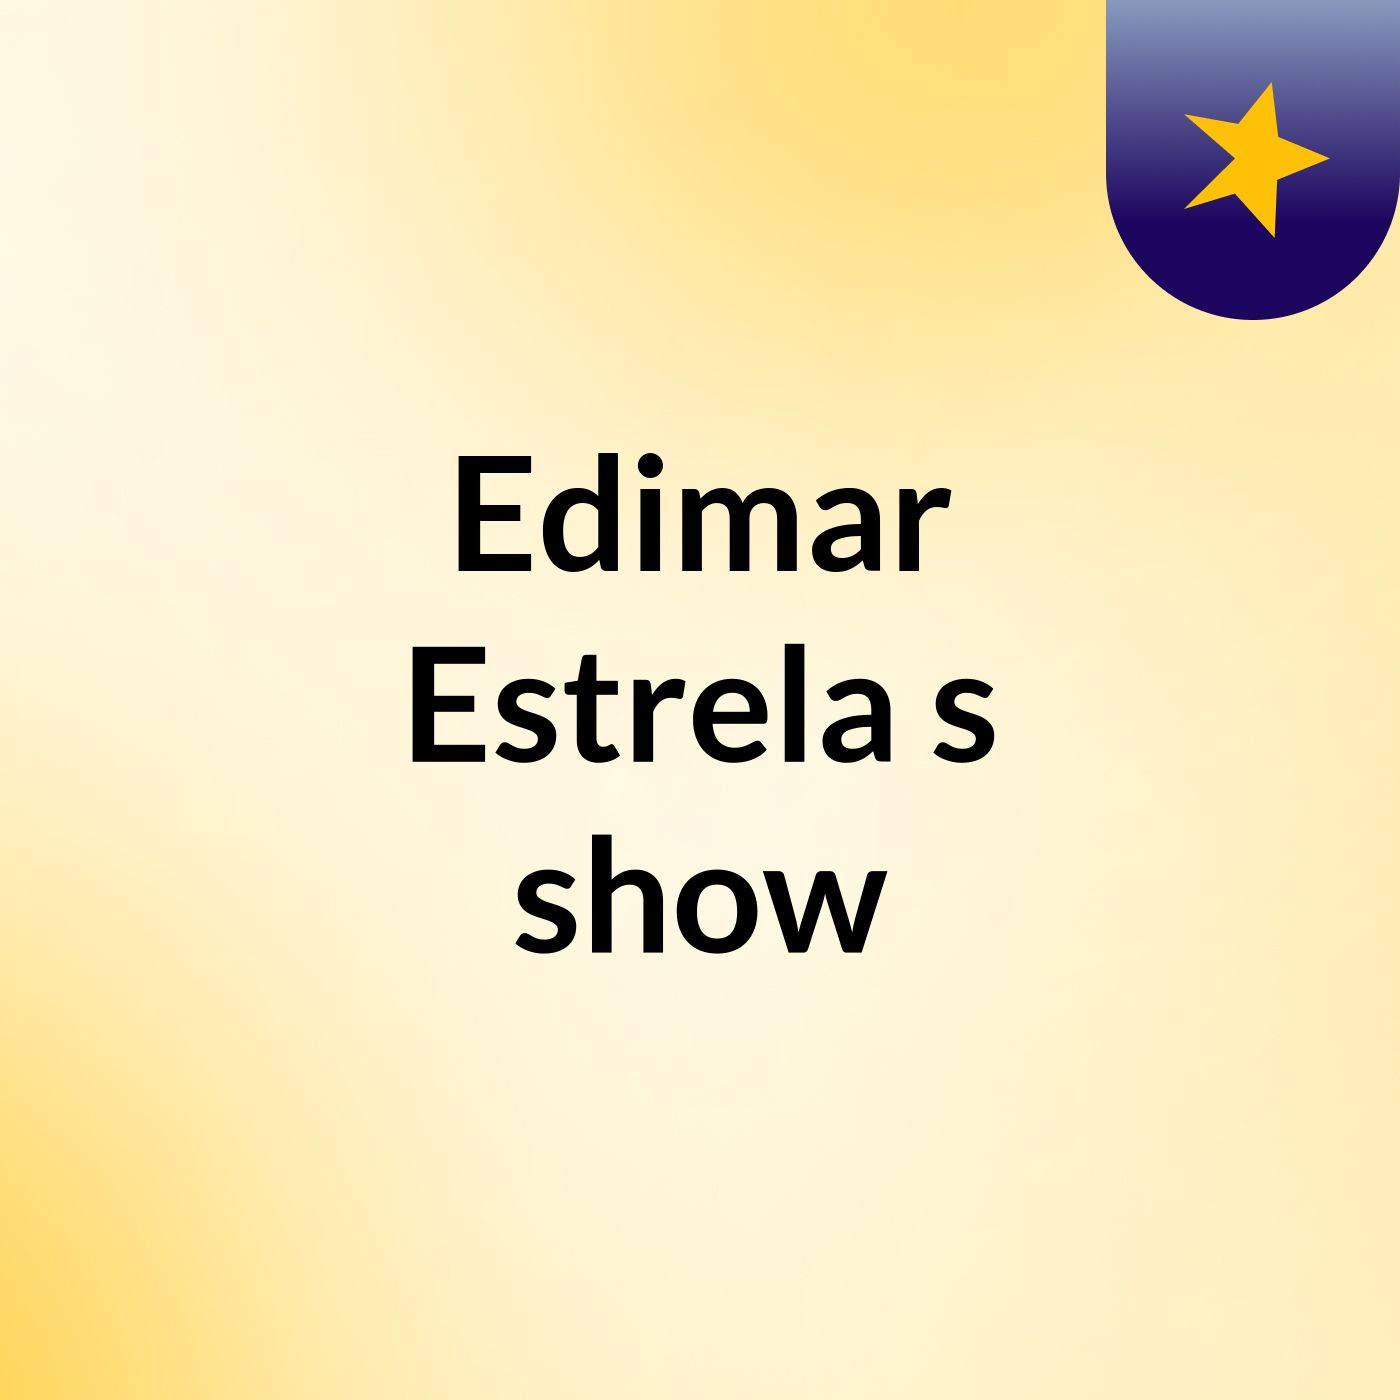 Edimar Estrela's show